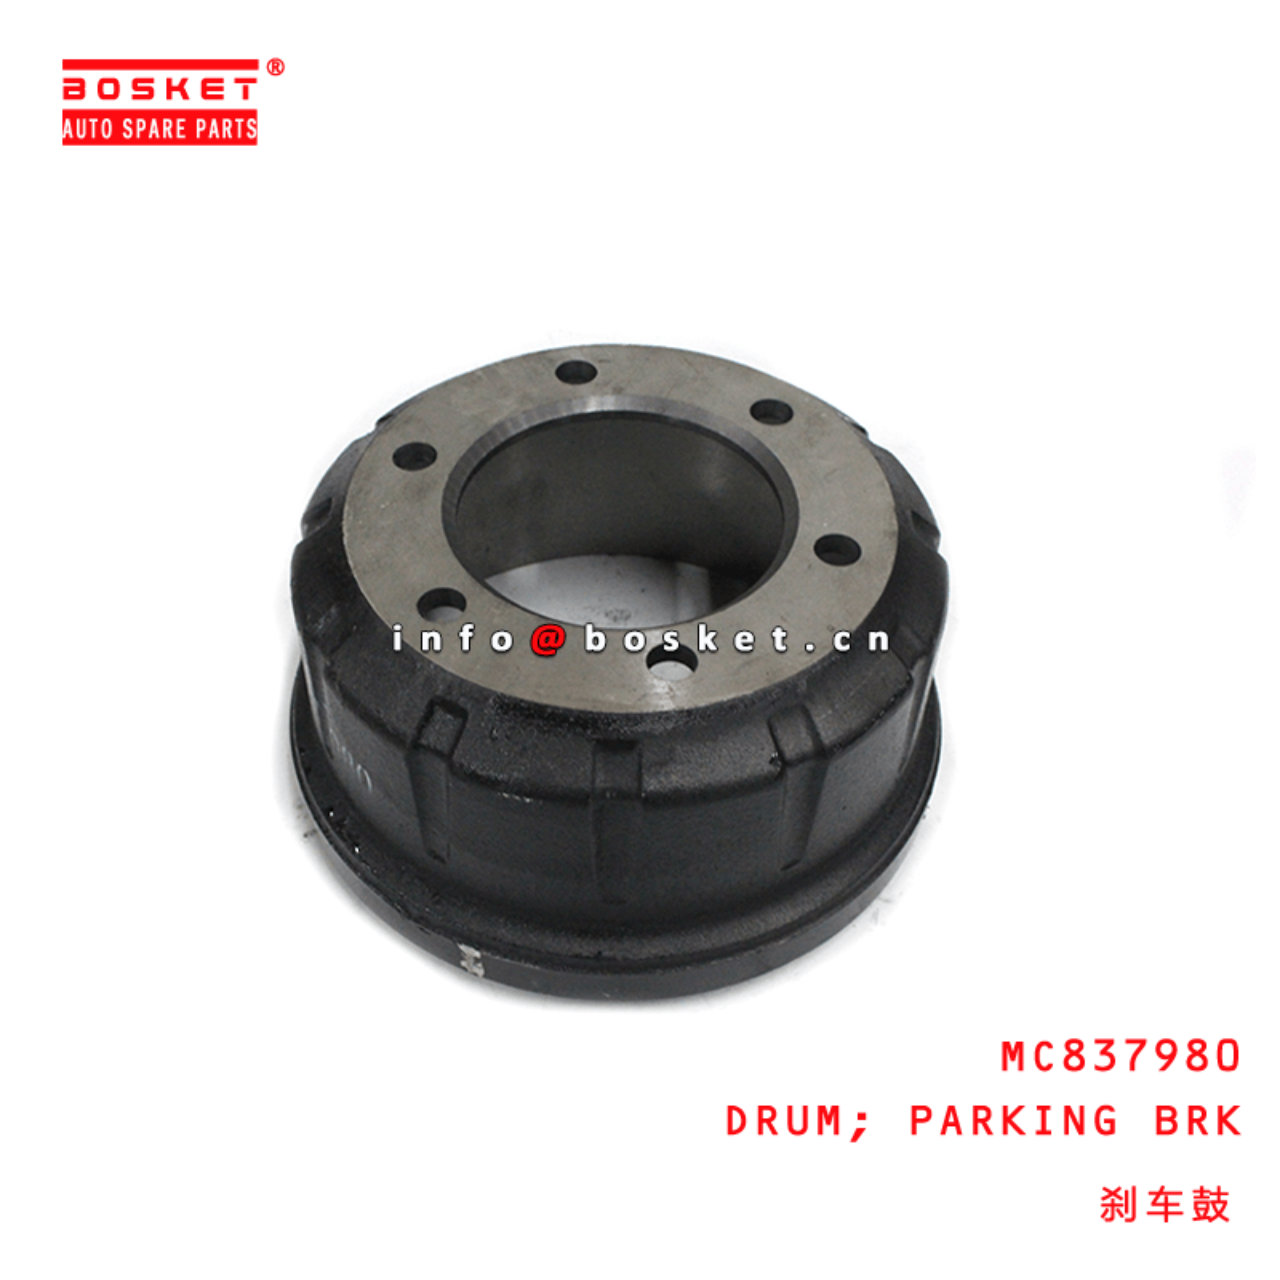 MC837980 Parking Brake Drum Suitable For MITSUBISHI FUSO - For 